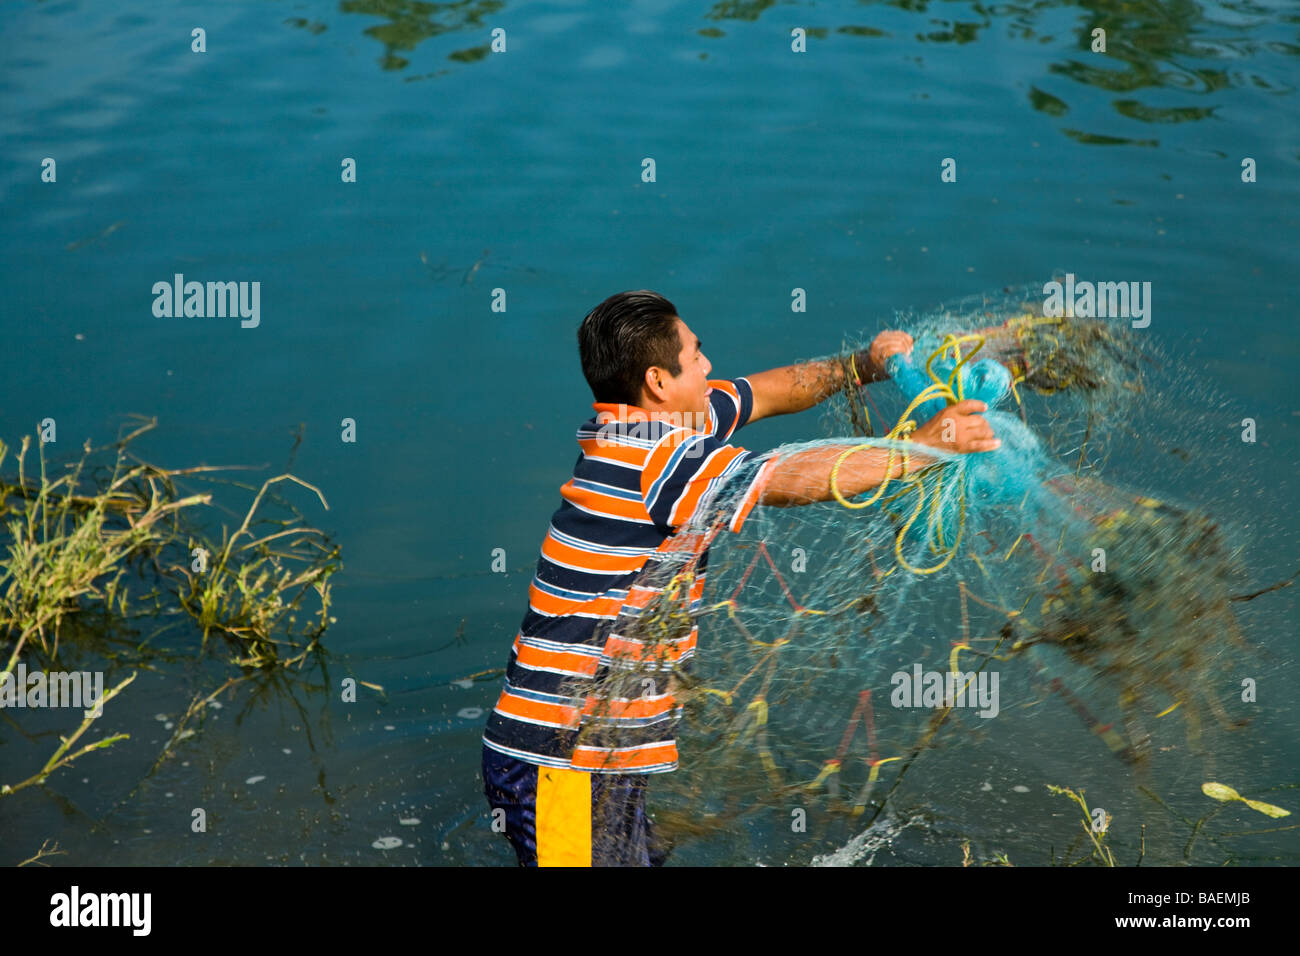 https://c8.alamy.com/comp/BAEMJB/mexico-san-jose-del-cabo-mexican-man-throwing-net-by-hand-while-fishing-BAEMJB.jpg